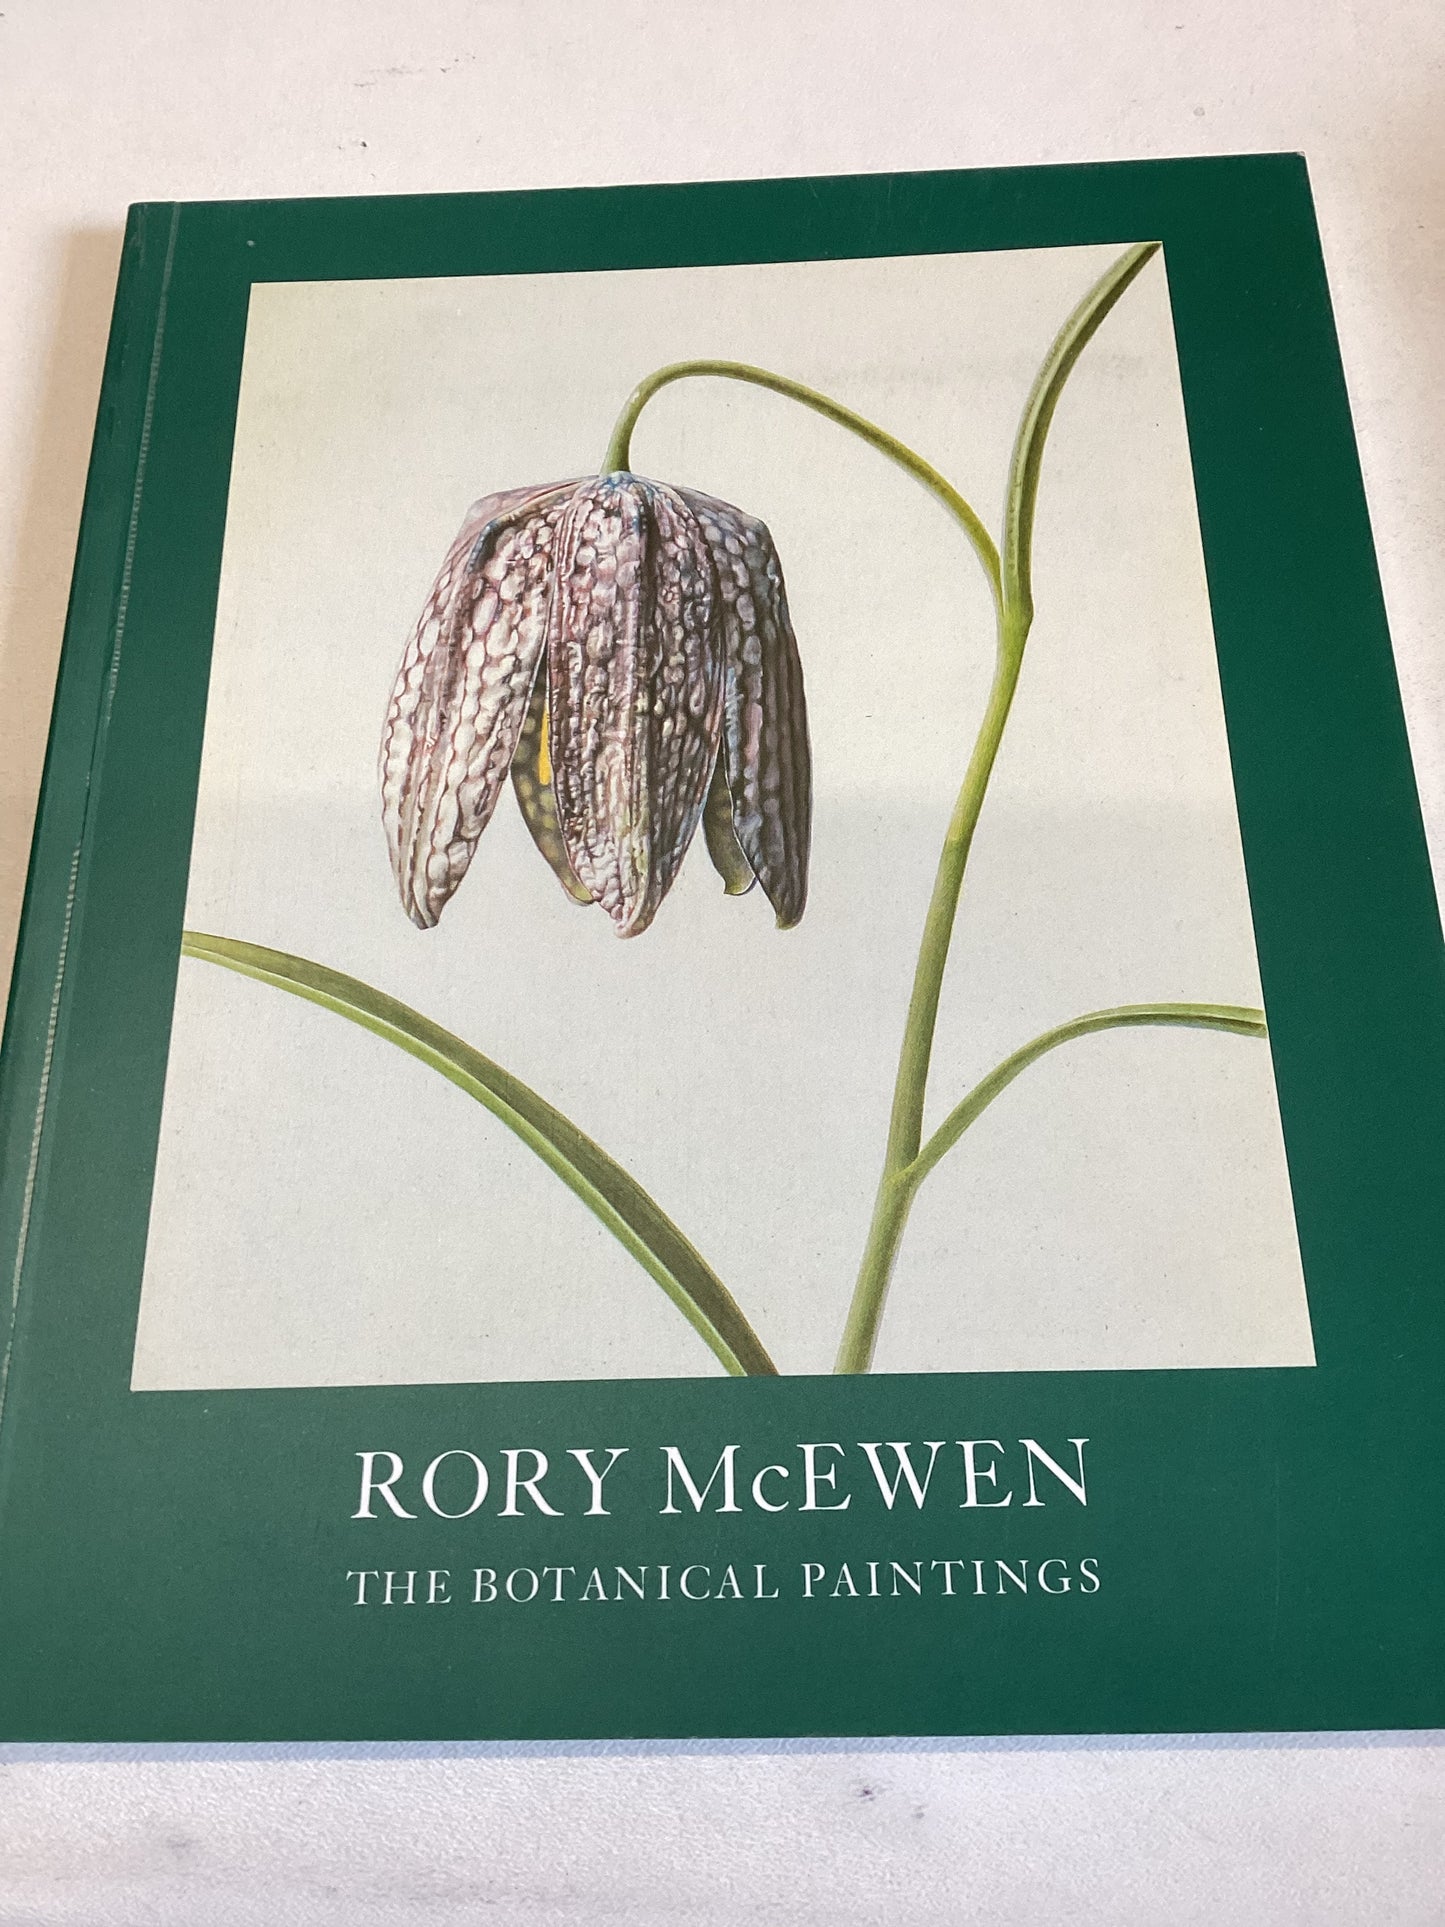 Rory McEwen The Botanical Paintings Edinburgh 1932-1982